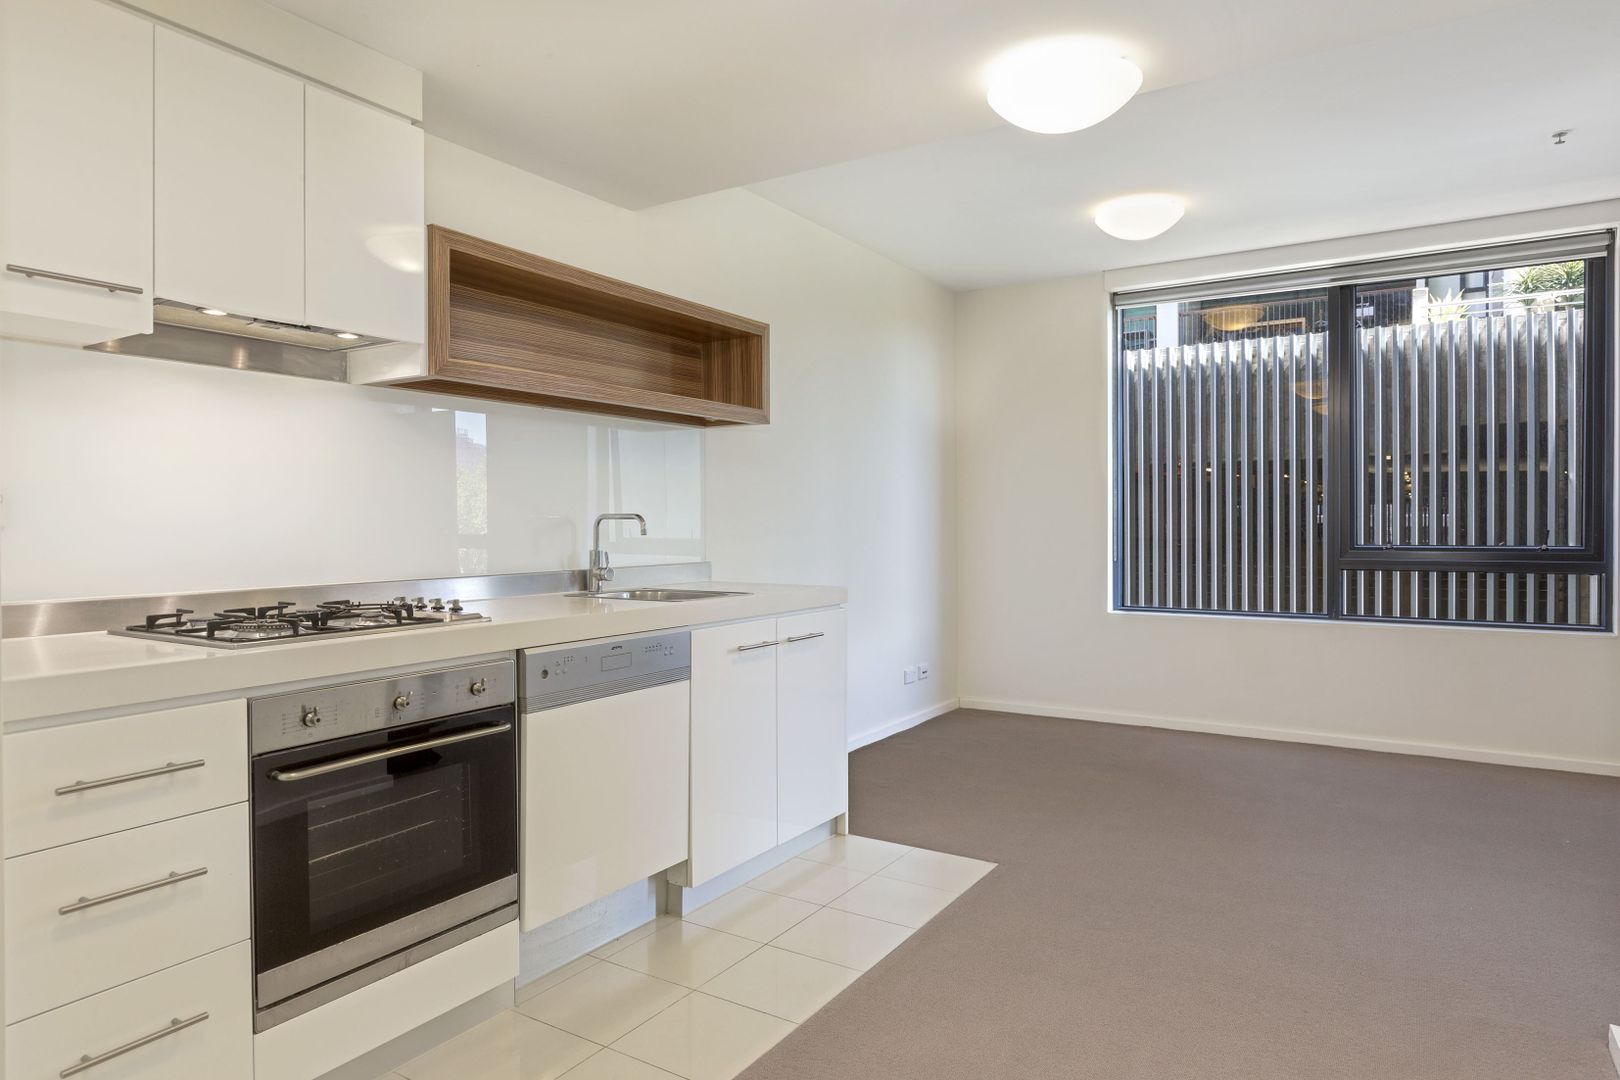 403 594 St Kilda Road Melbourne Vic 3000 Apartment For